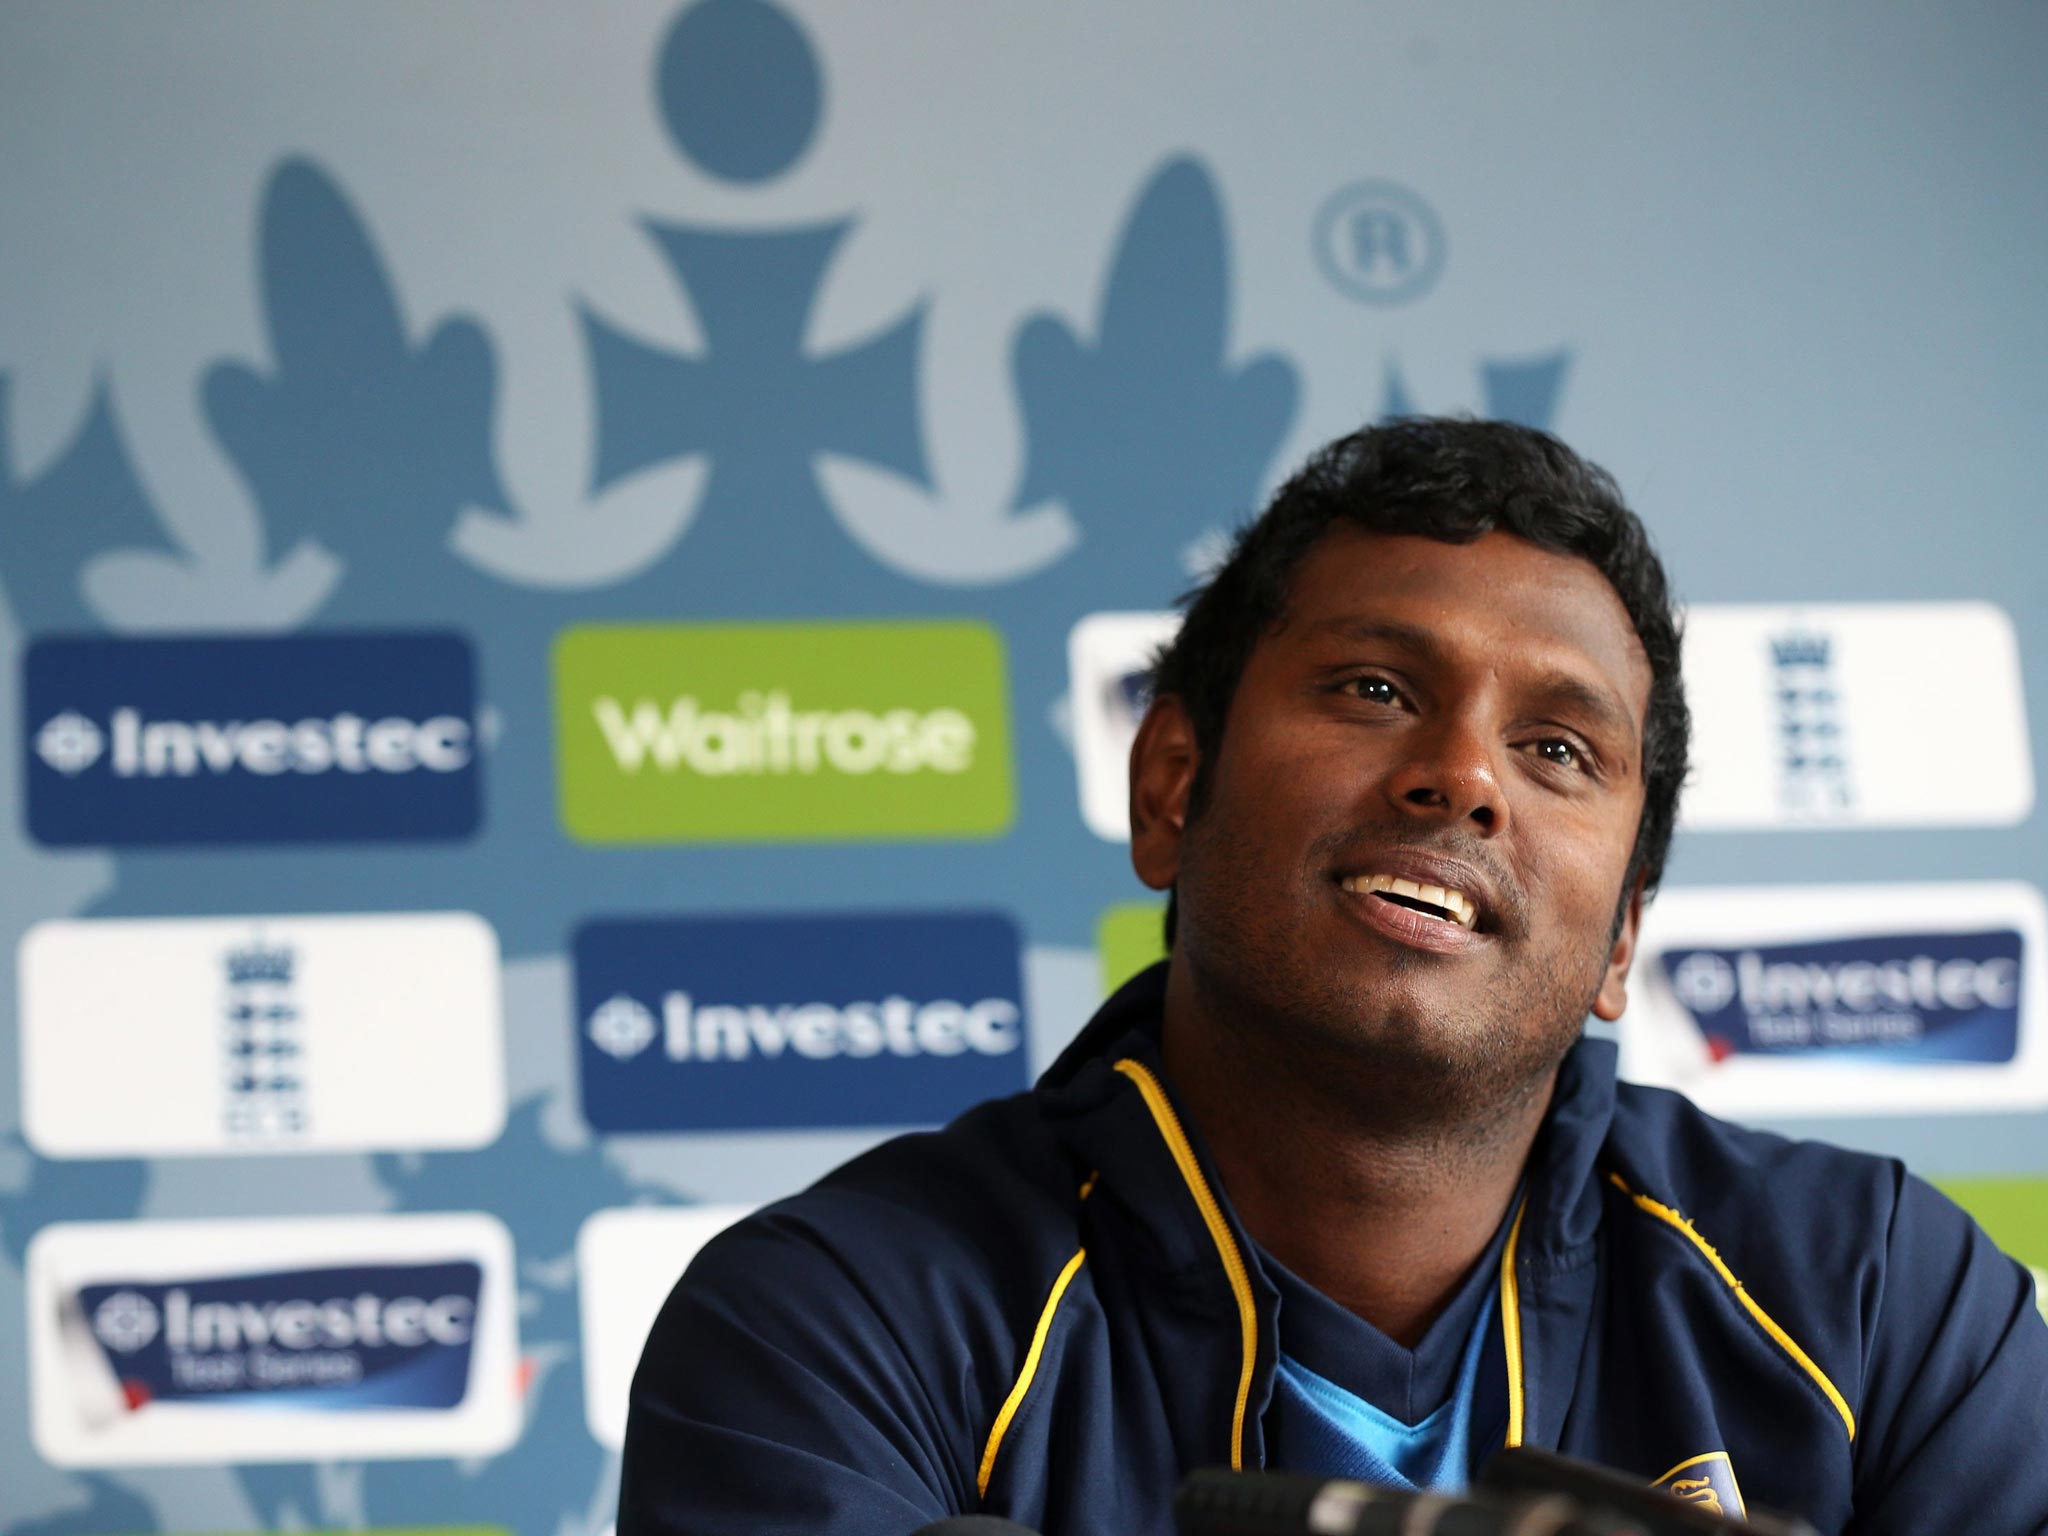 Sri Lanka's captain Angelo Mathews